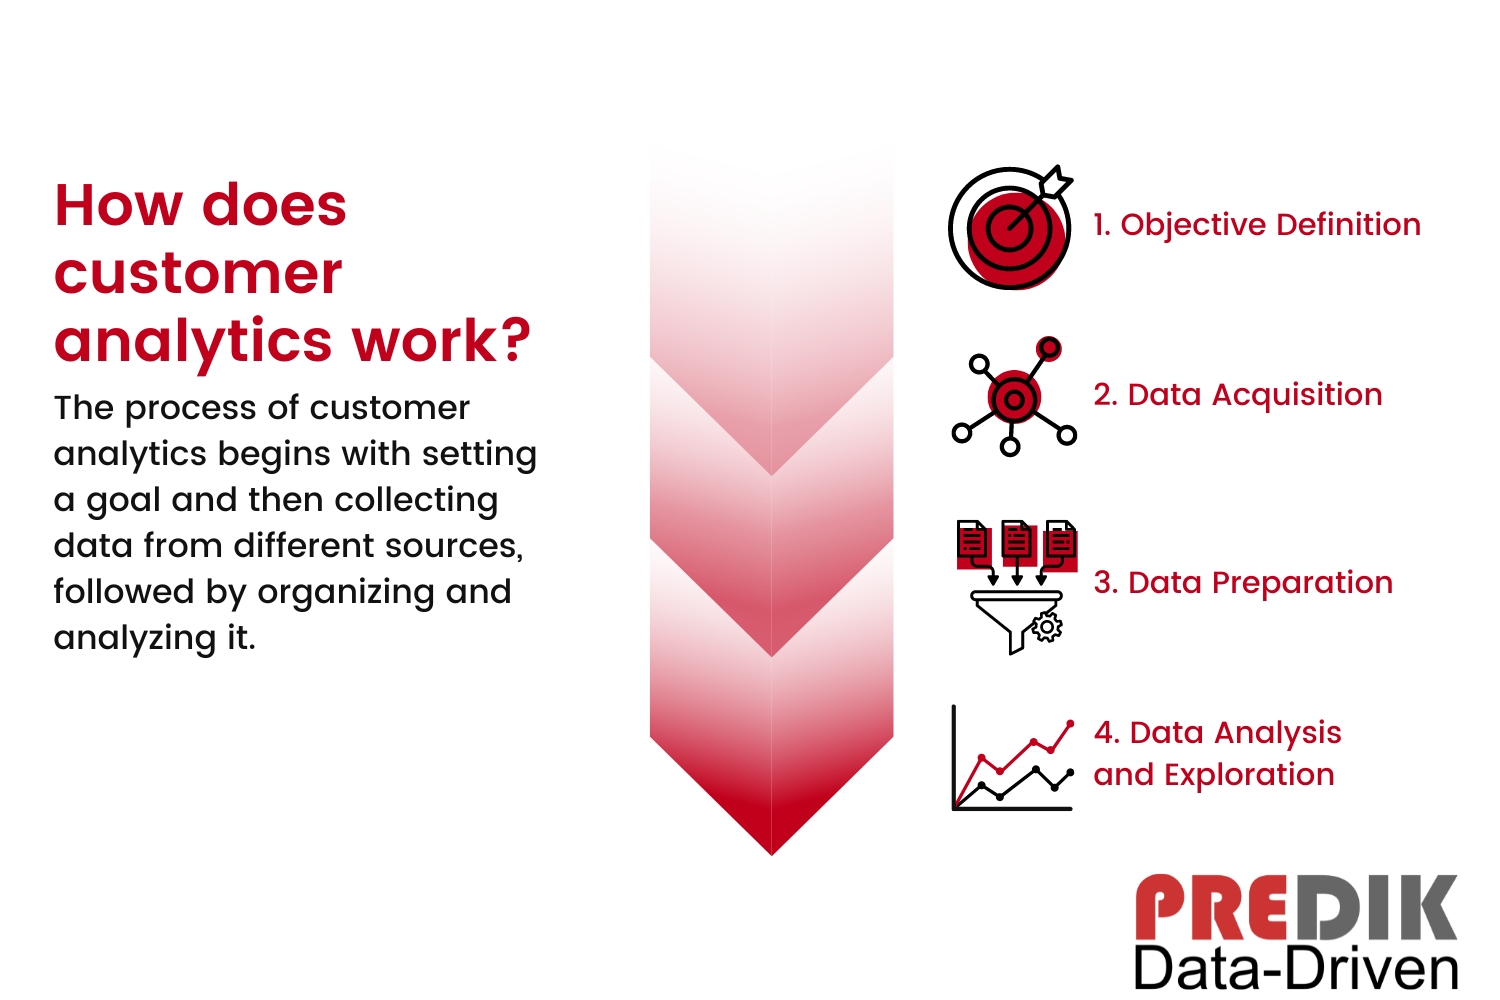 Image explaining how customer data analytics work